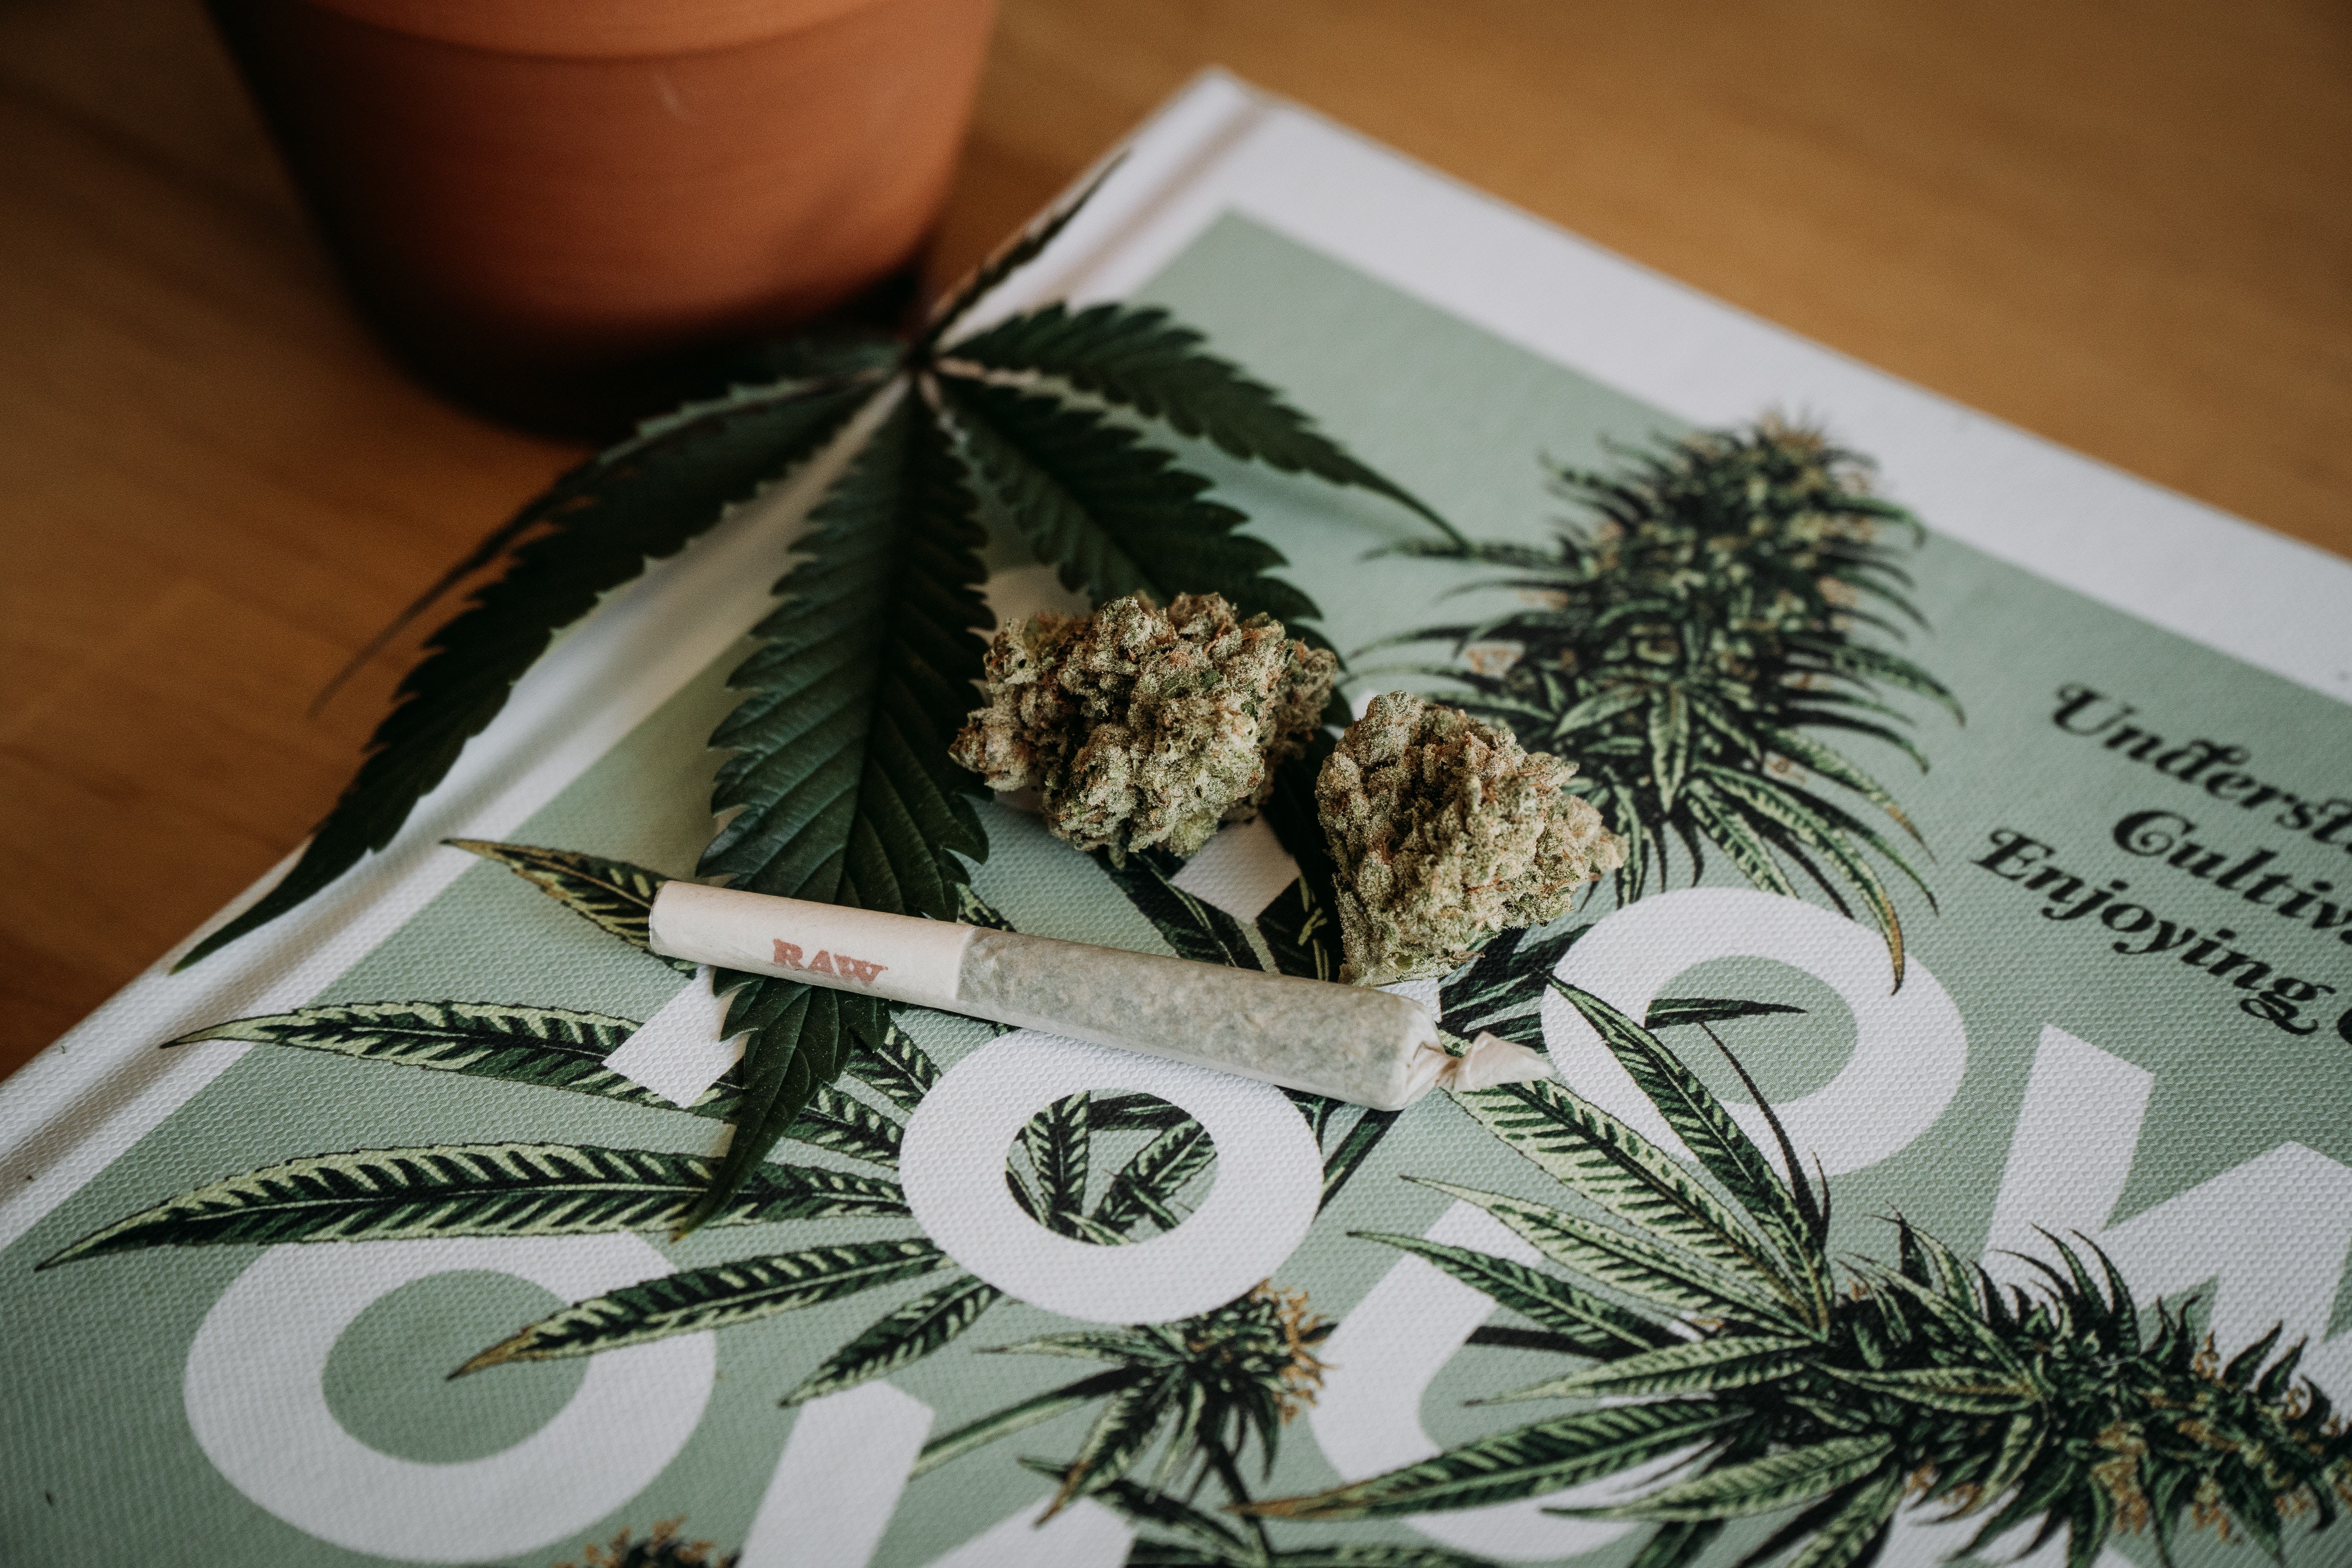 Flower One Launches Veteran Created And Inspired Cannabis Brand, Kuno